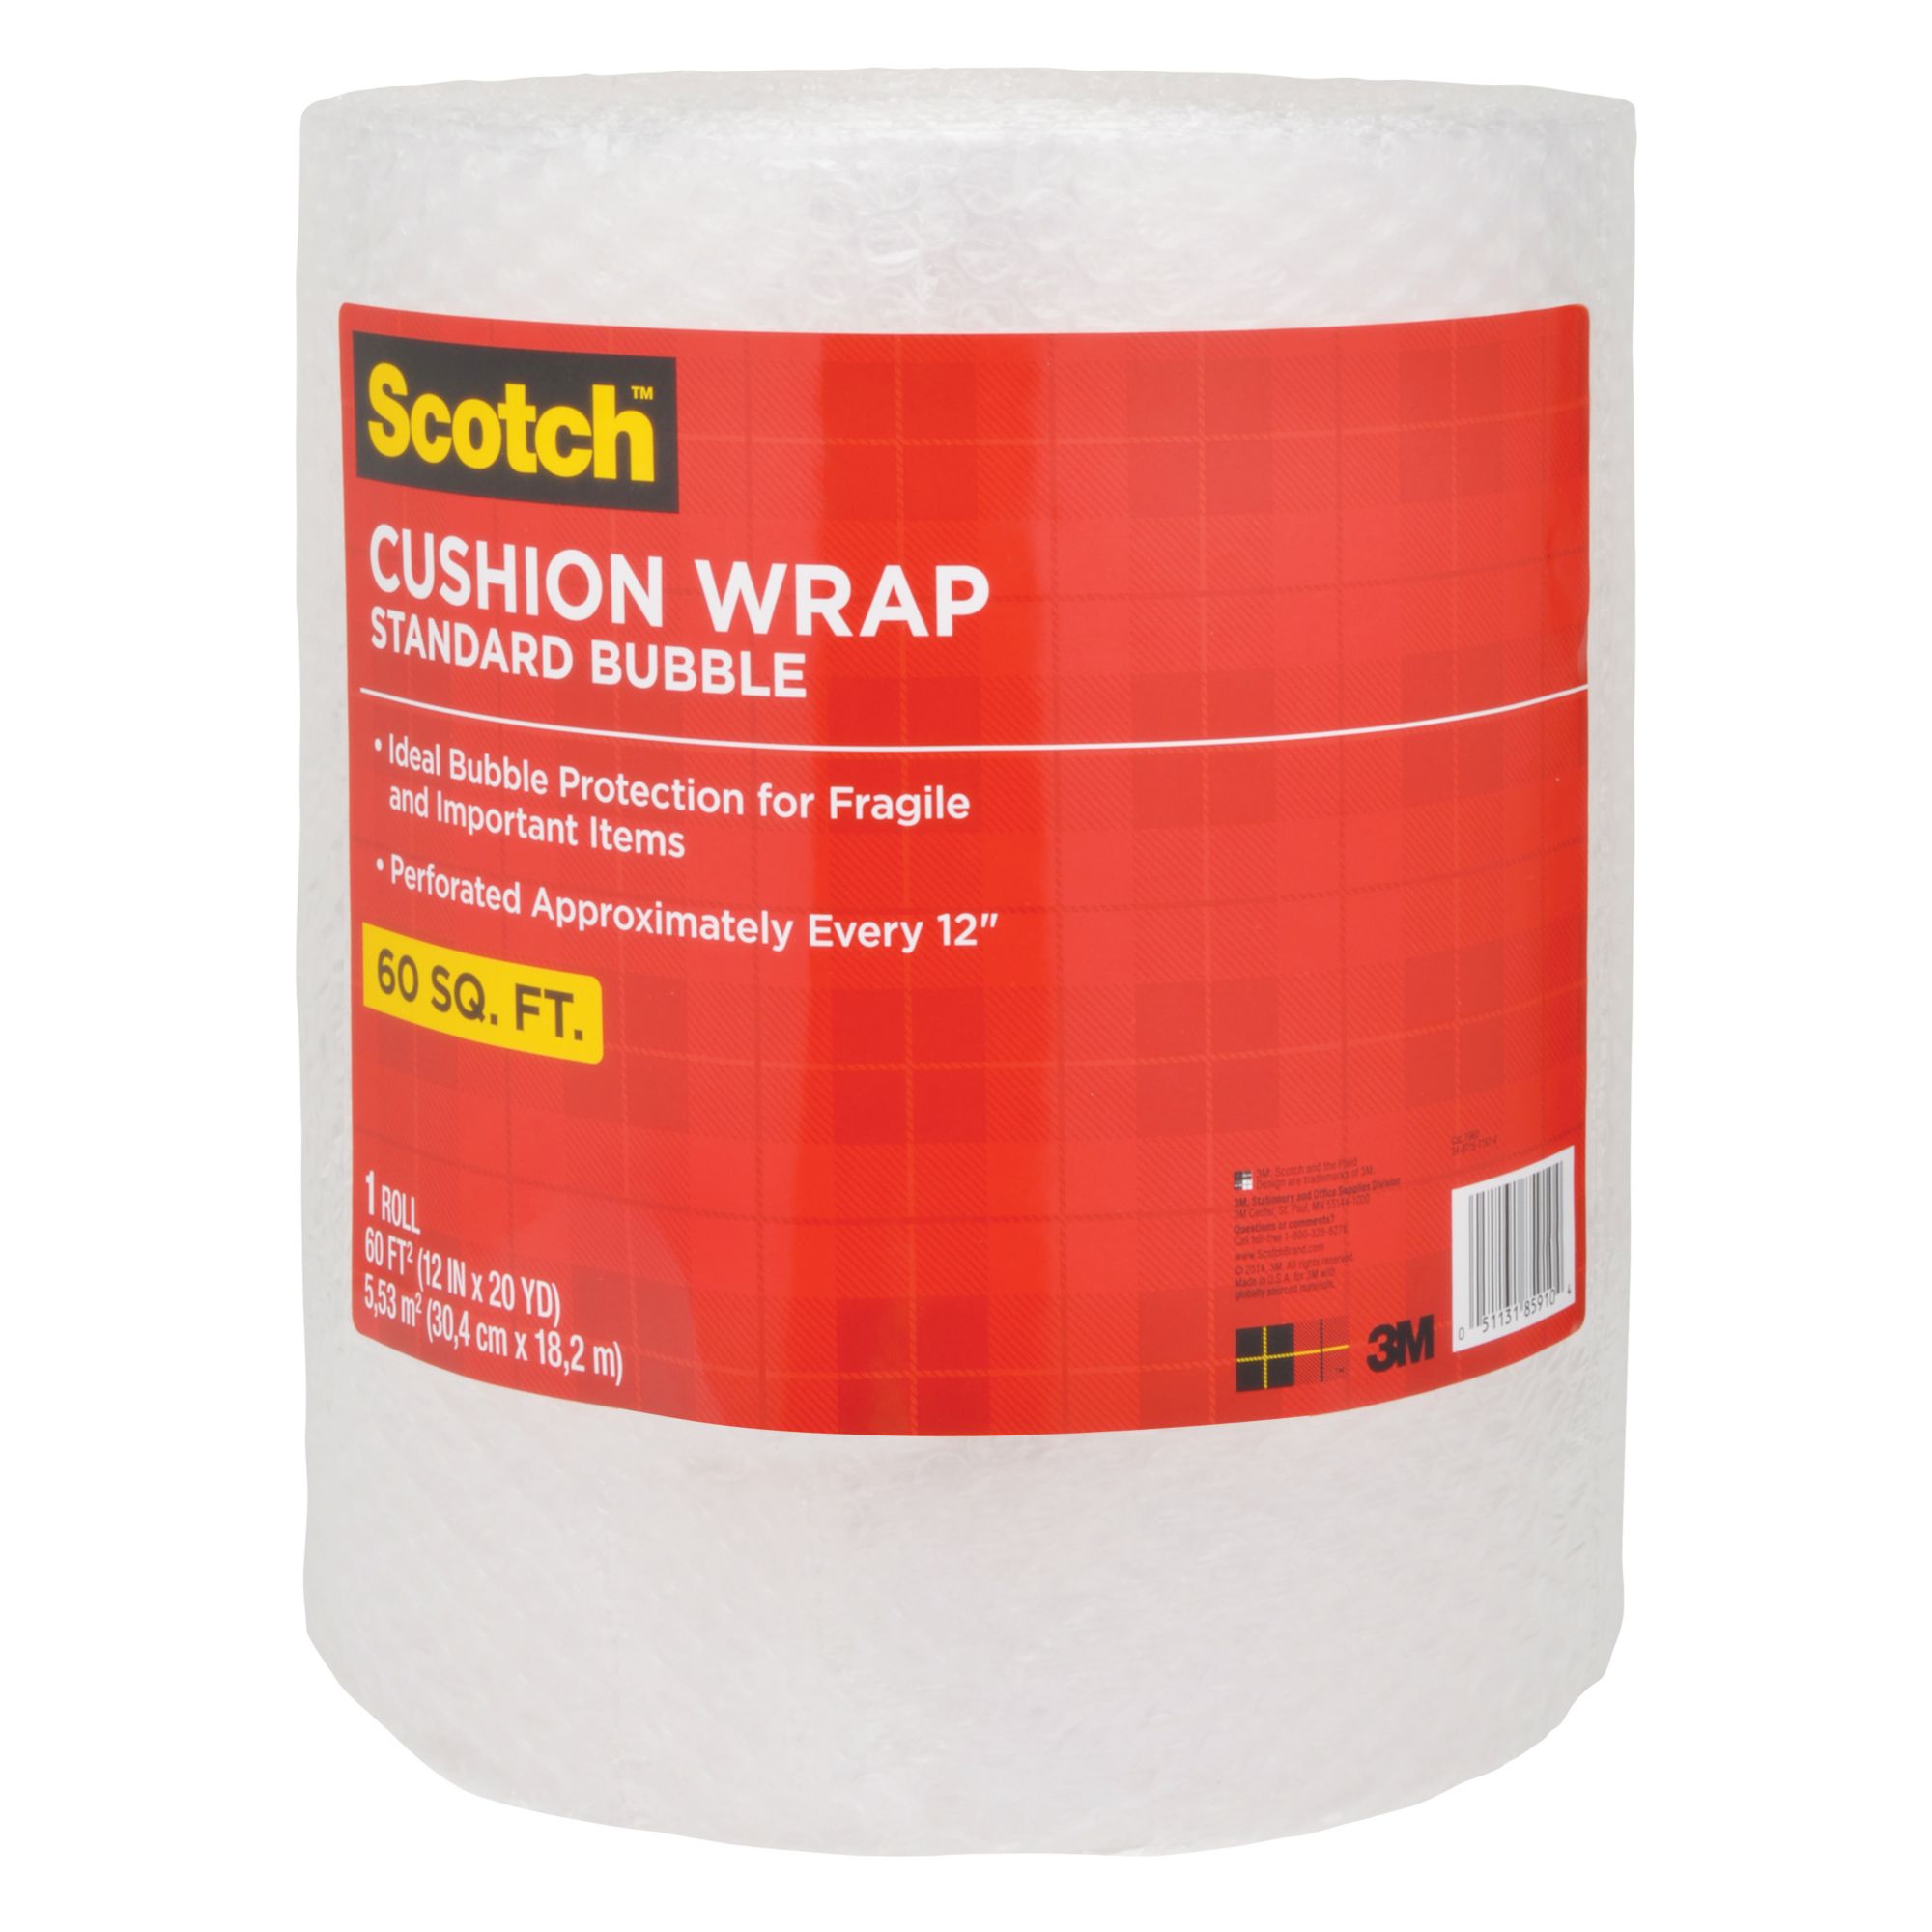 Scotch Standard Bubble Cushion Wrap, 60 sq. ft